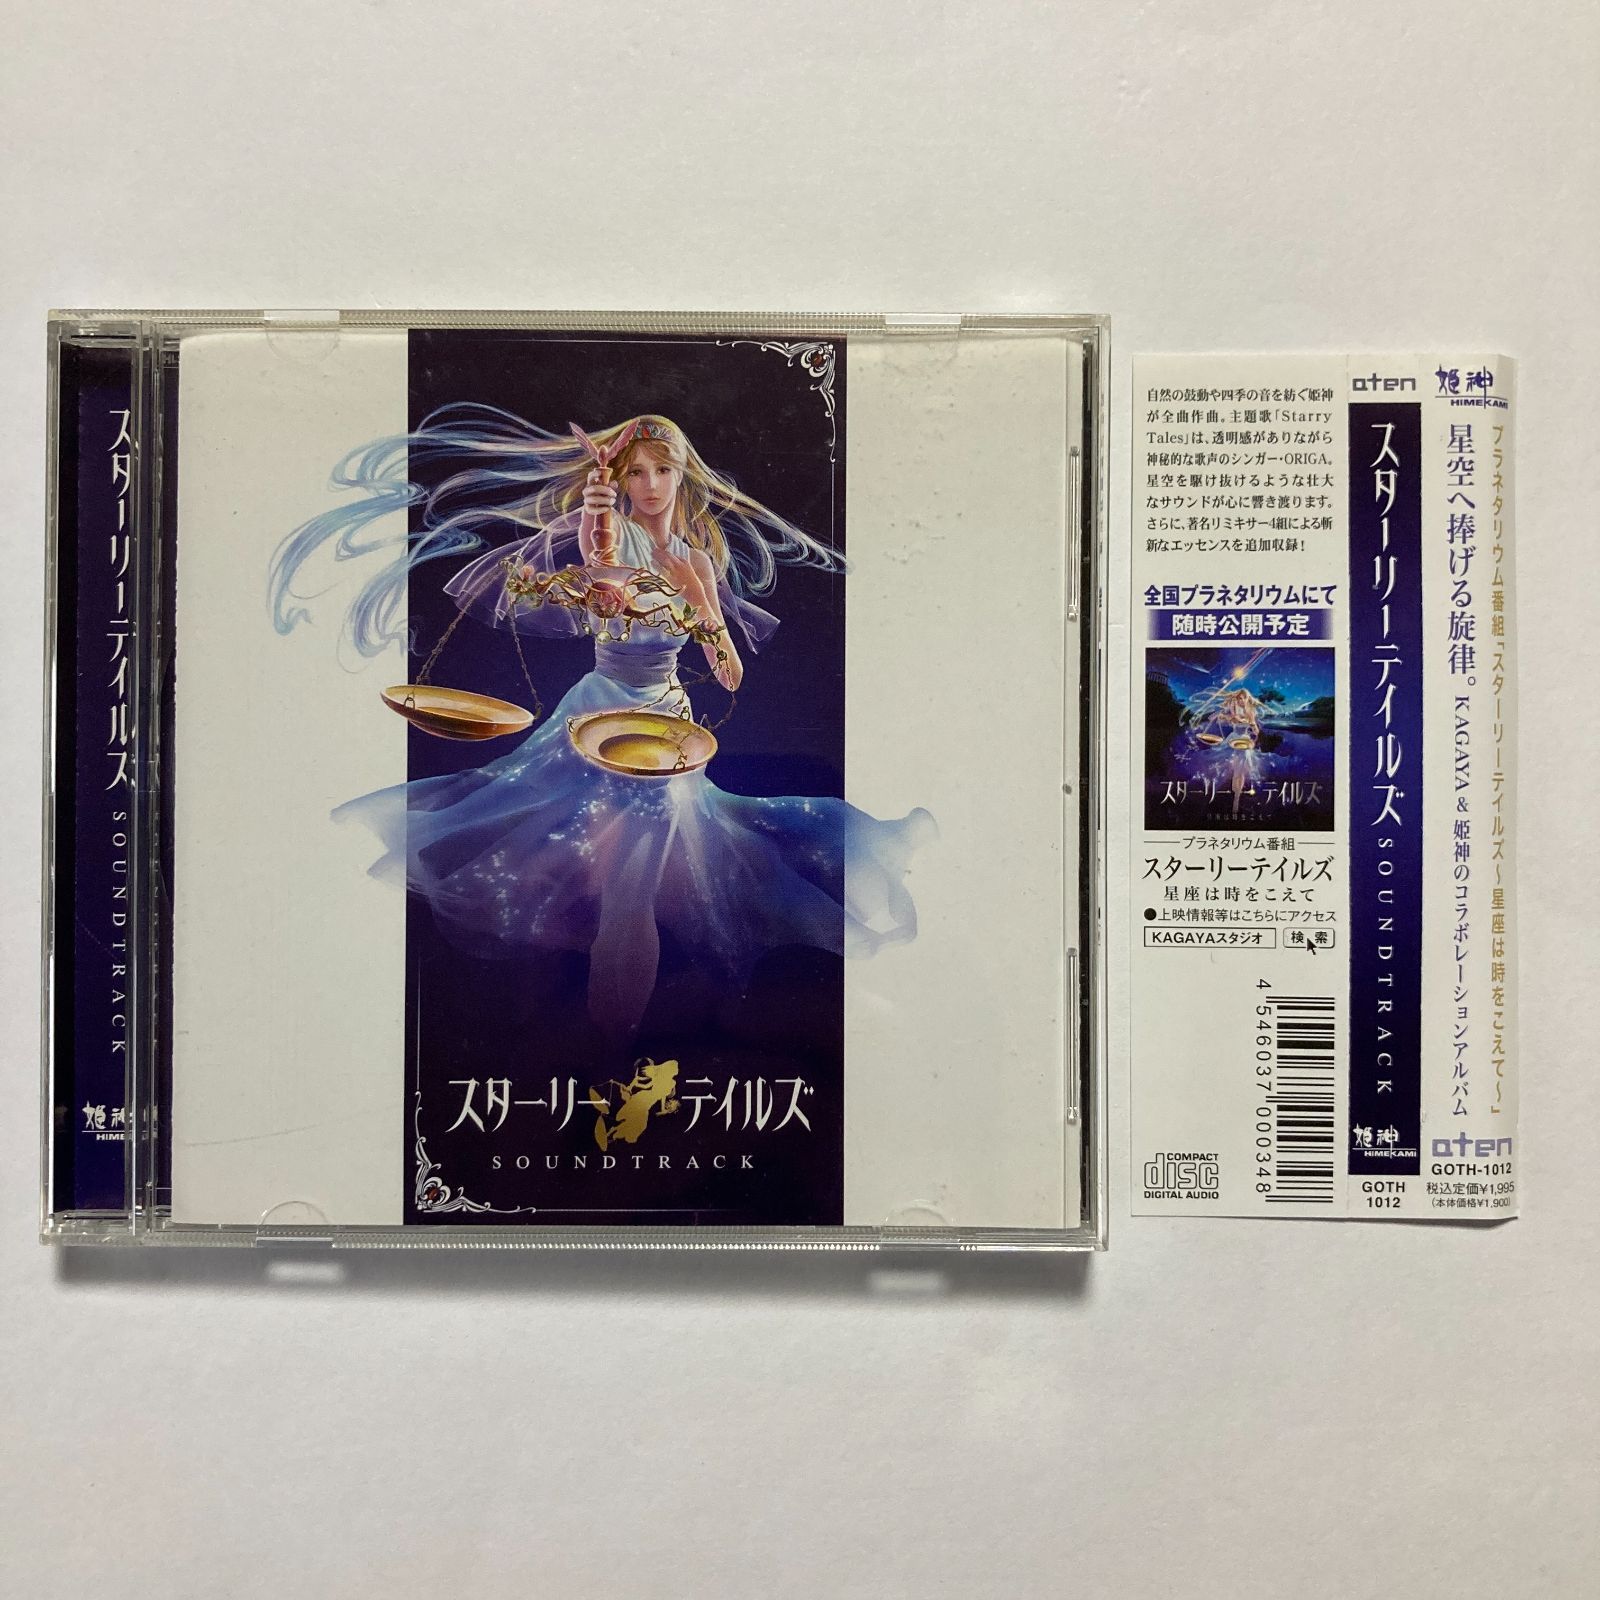 CD】姫神 スターリーテイルズ サウンドトラック Soundtrack GOTH-1012 QuiteKape メルカリ